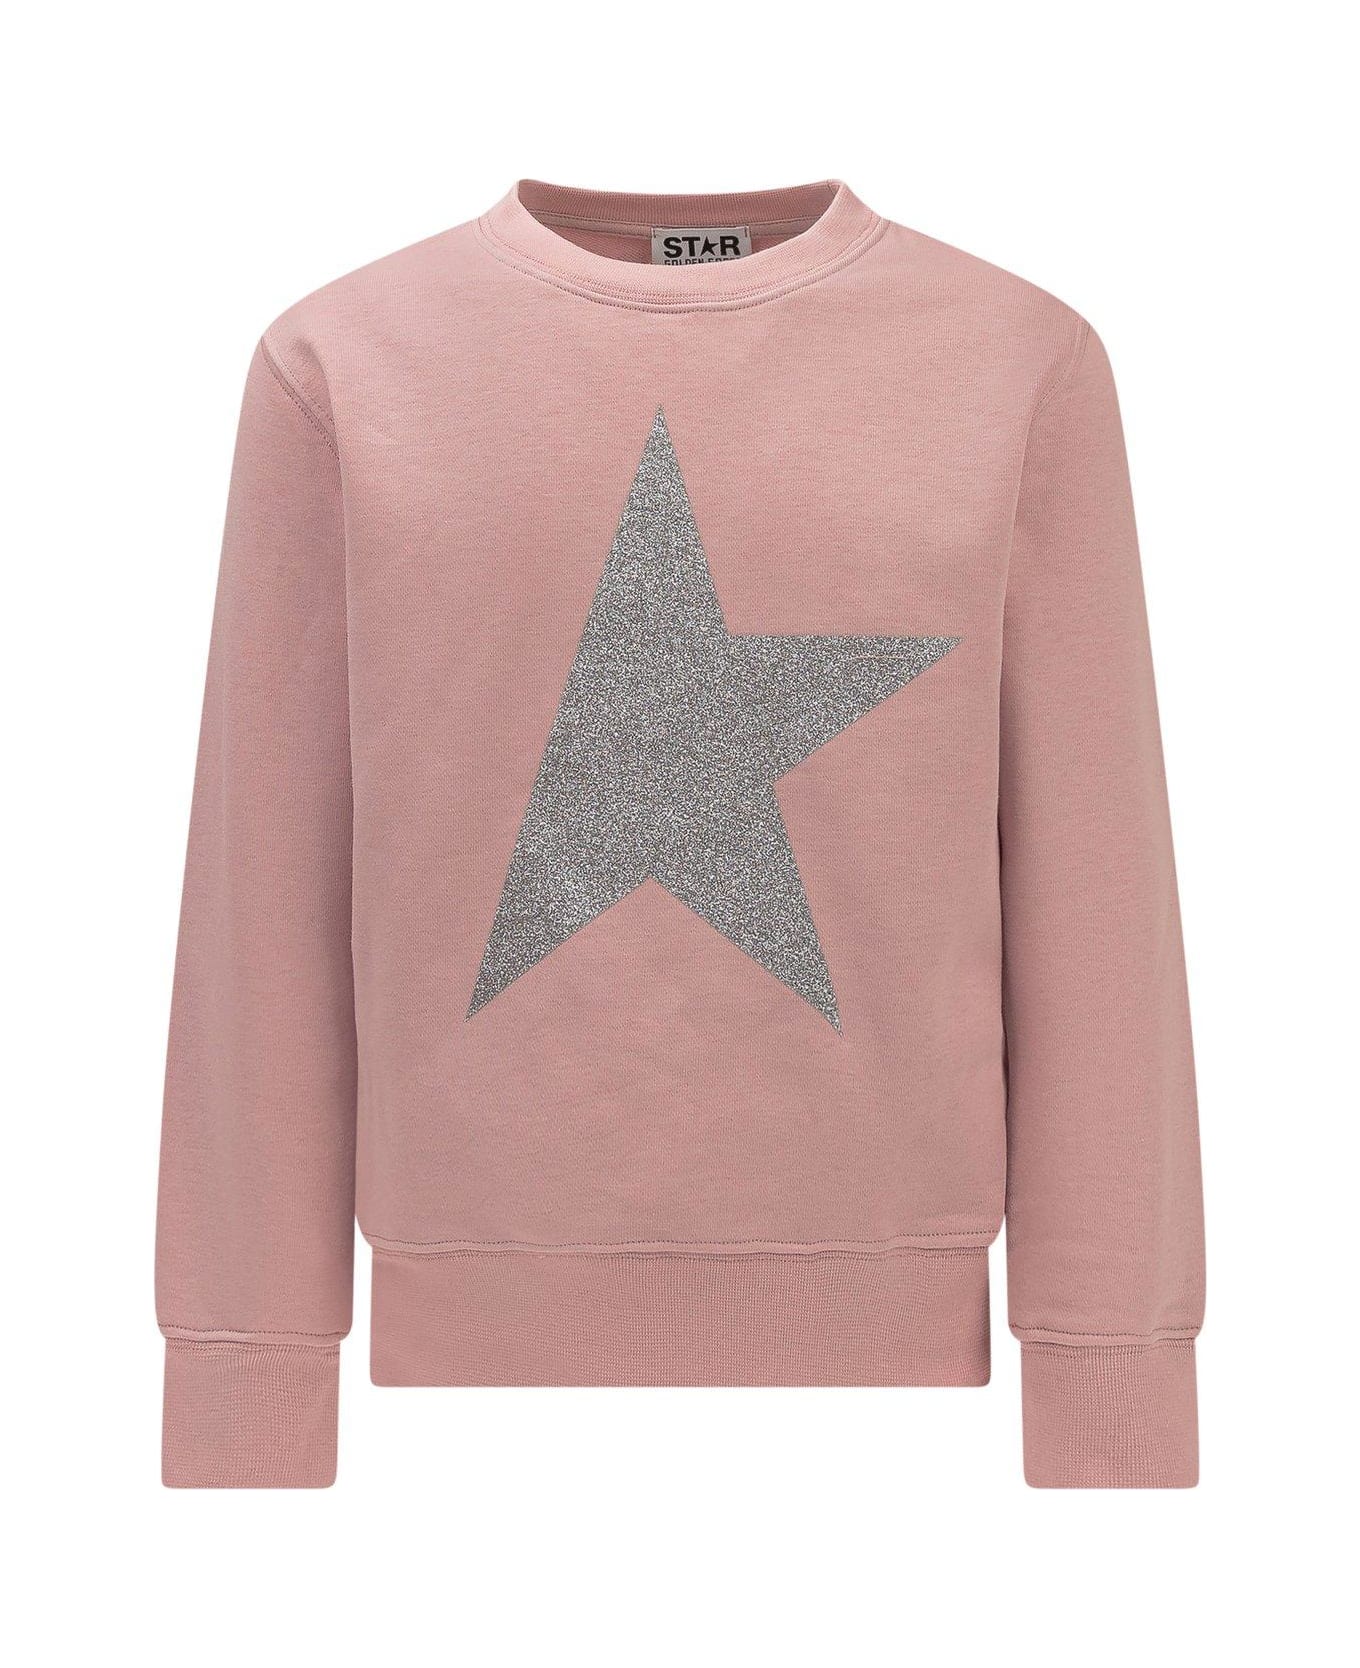 Golden Goose Star Patch Crewneck Sweatshirt - Pink/silver